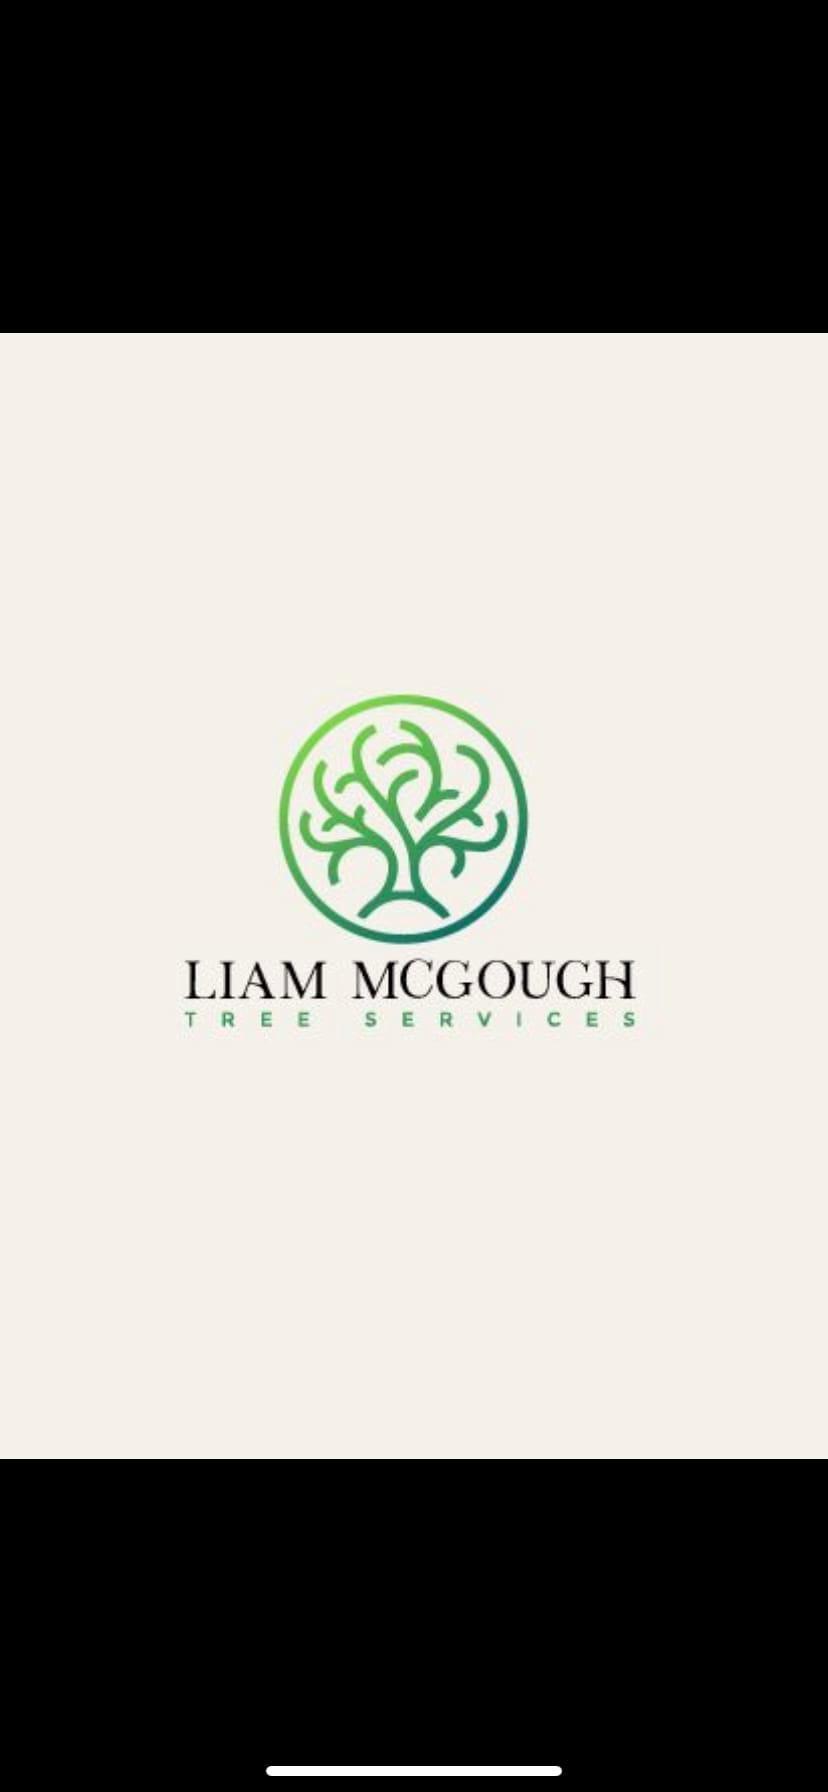 Images Liam McGough Tree Services